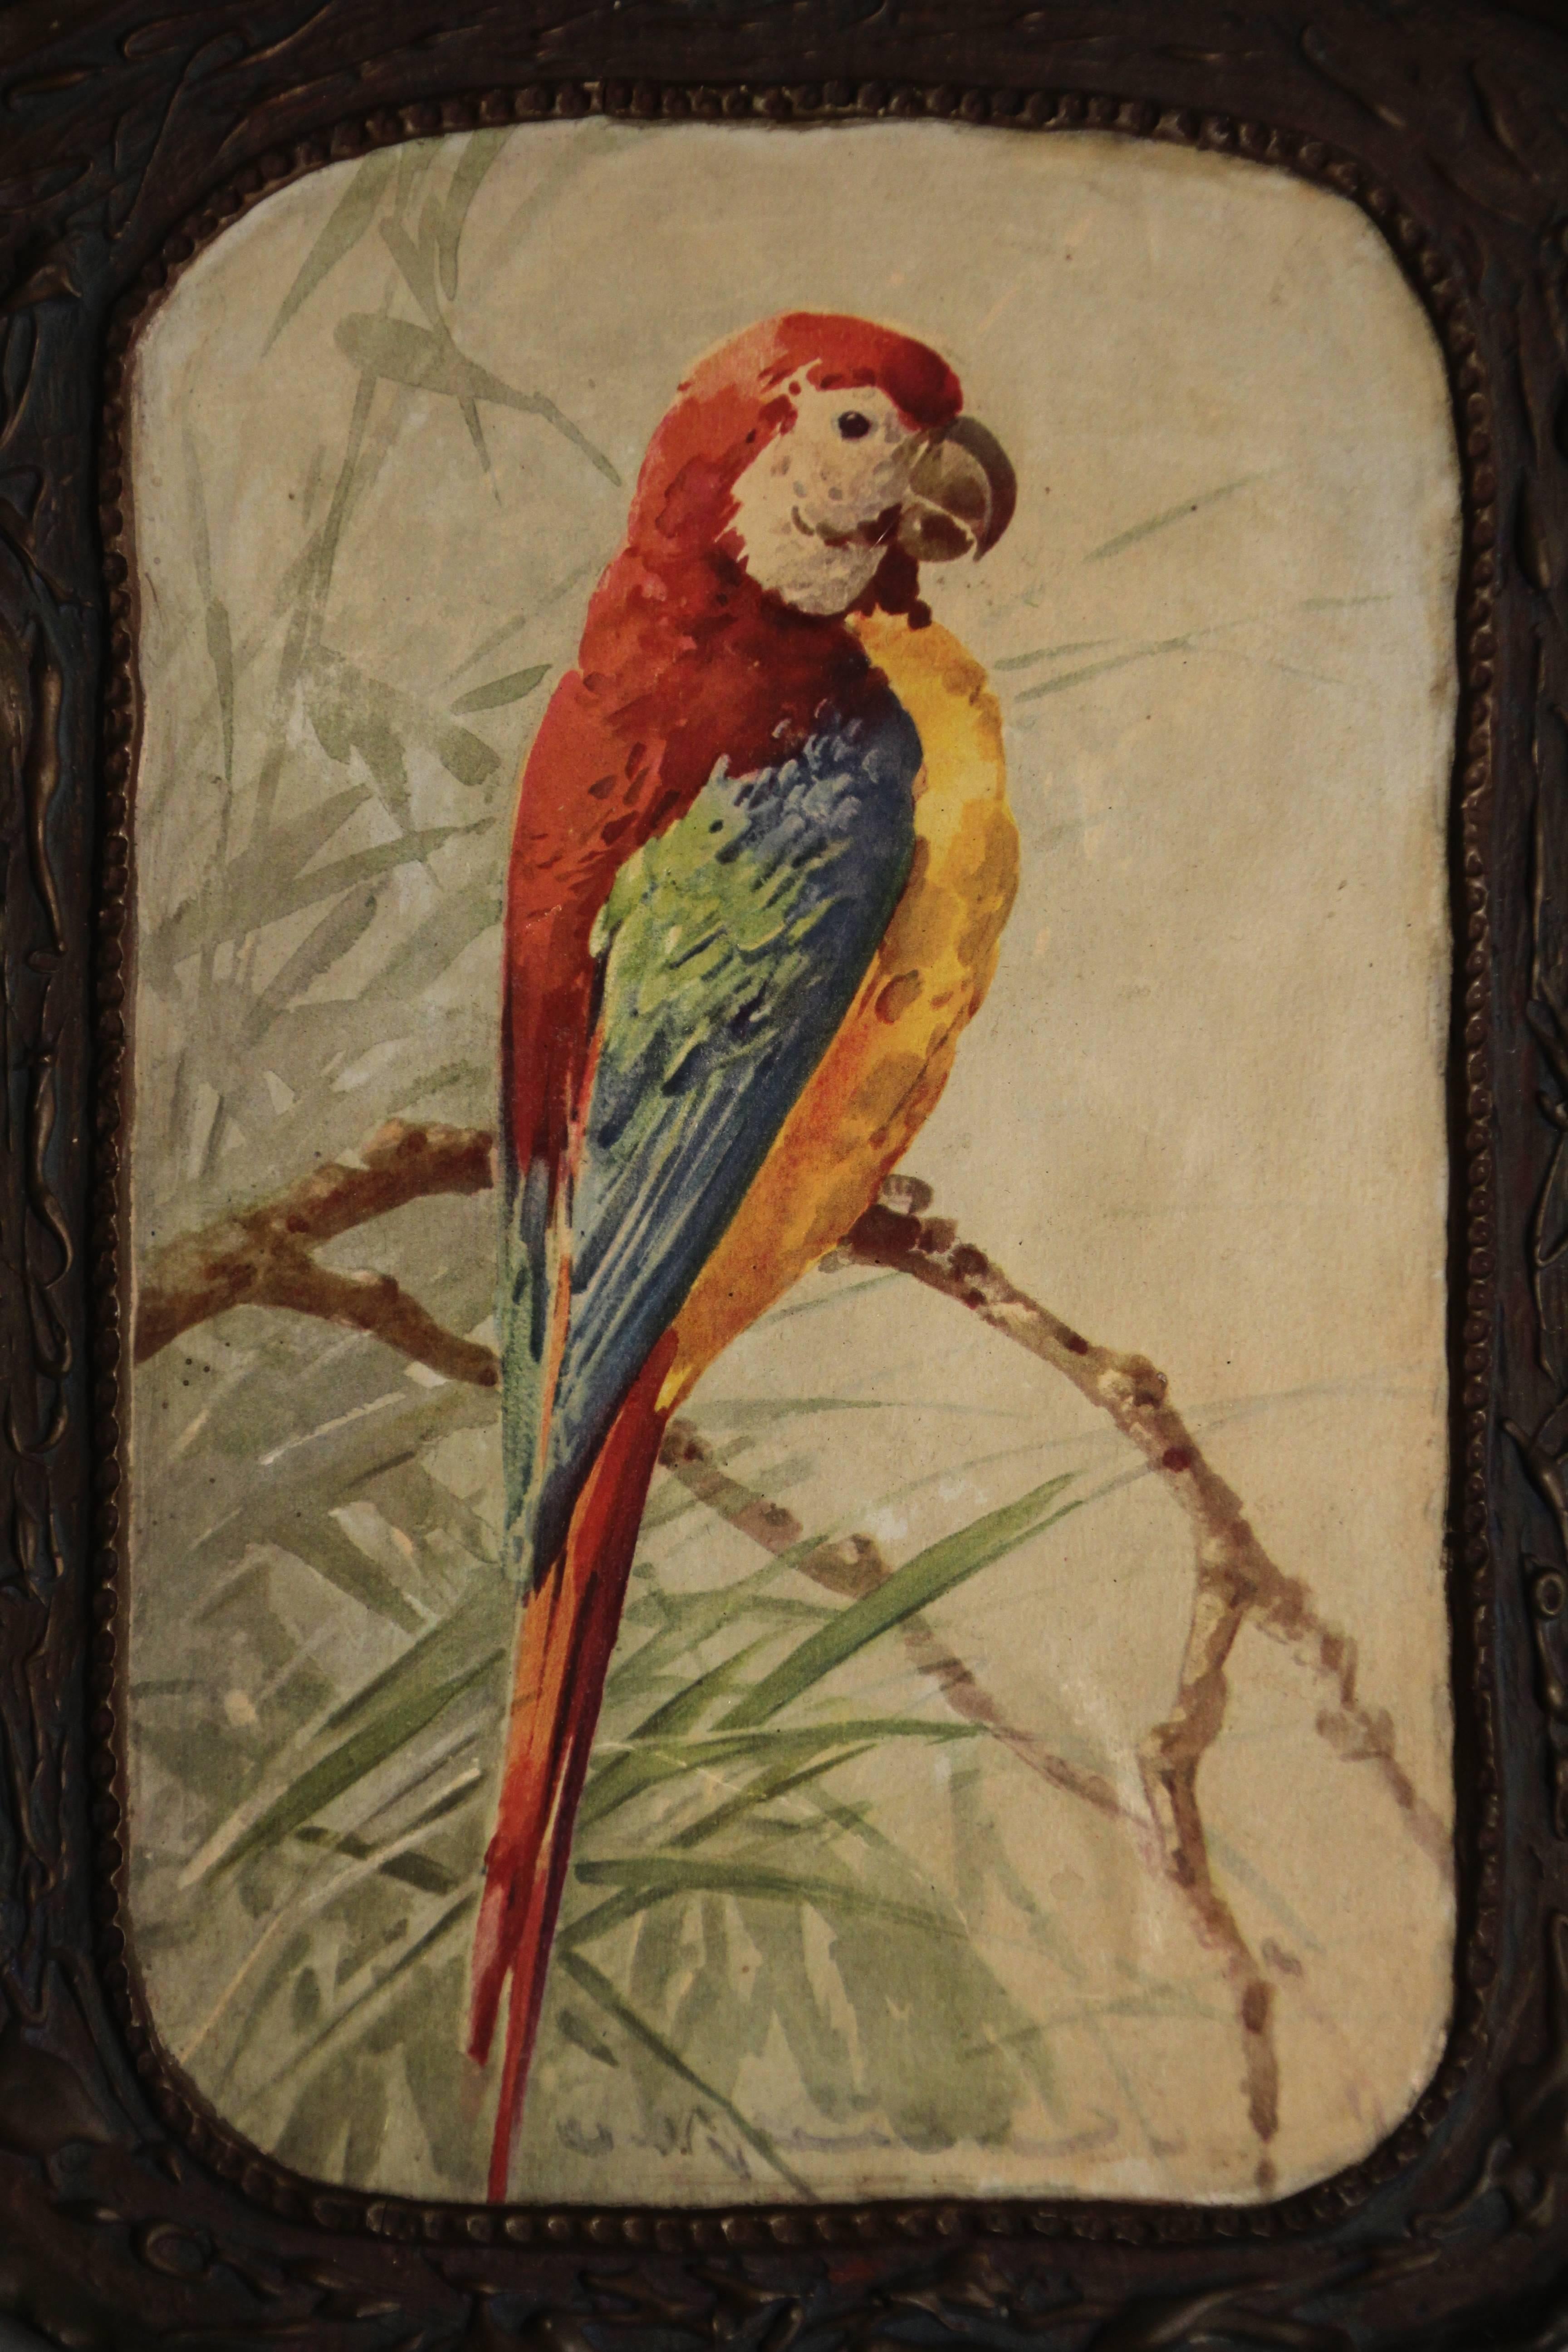 Print of parrot in original frame, circa 1920s.